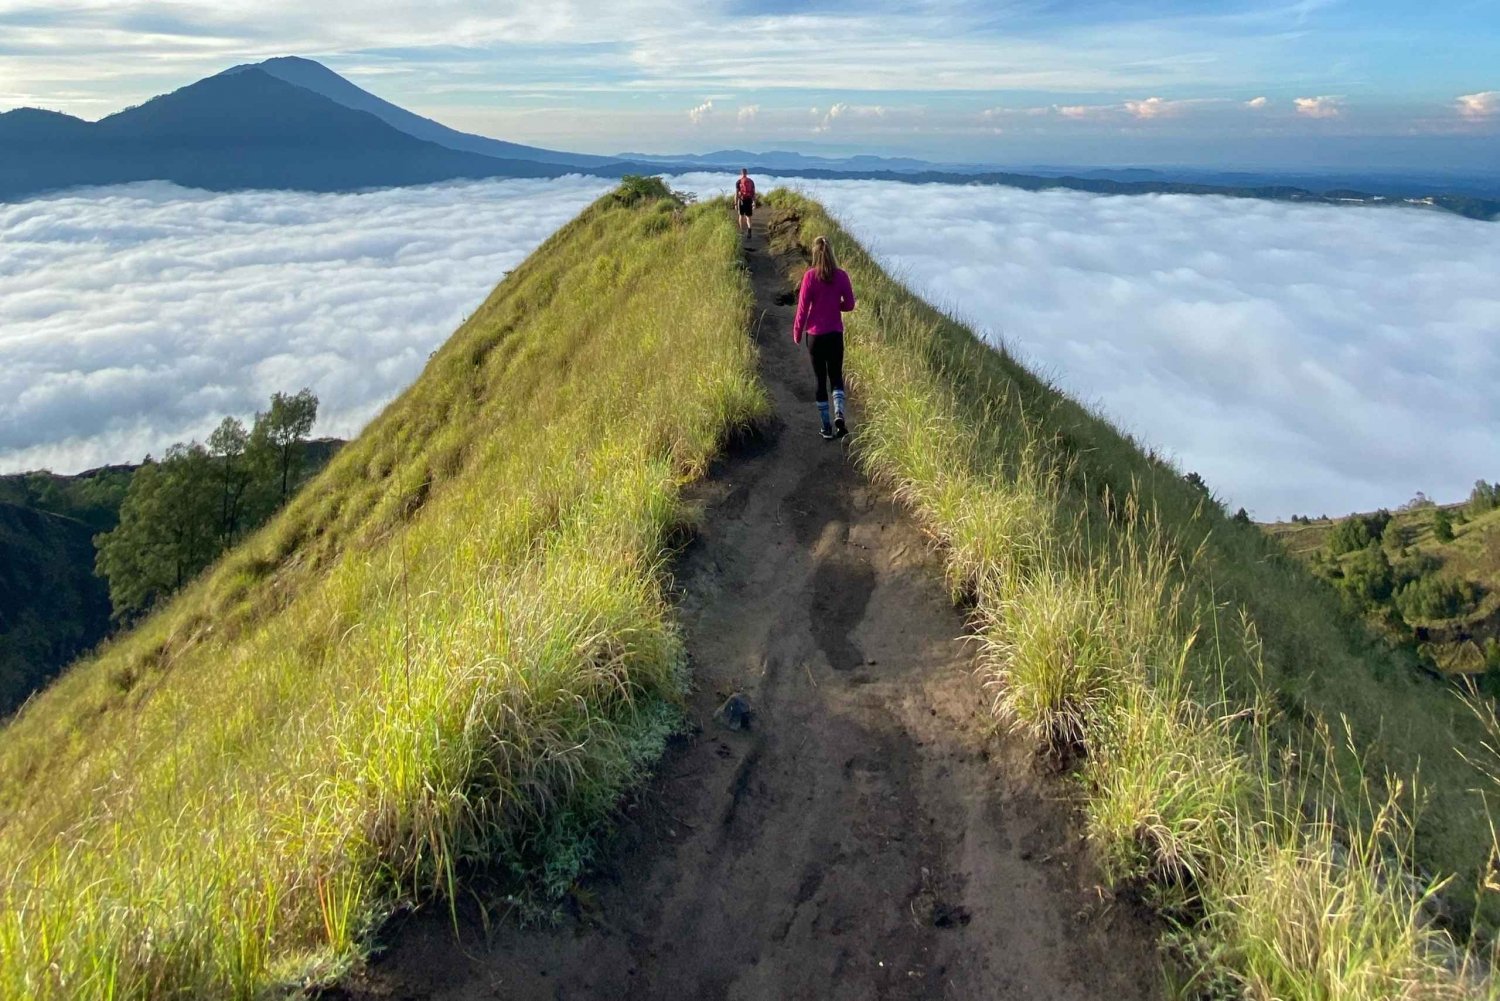 Bali: Mount Batur Sunrise Experience with All Inclusive